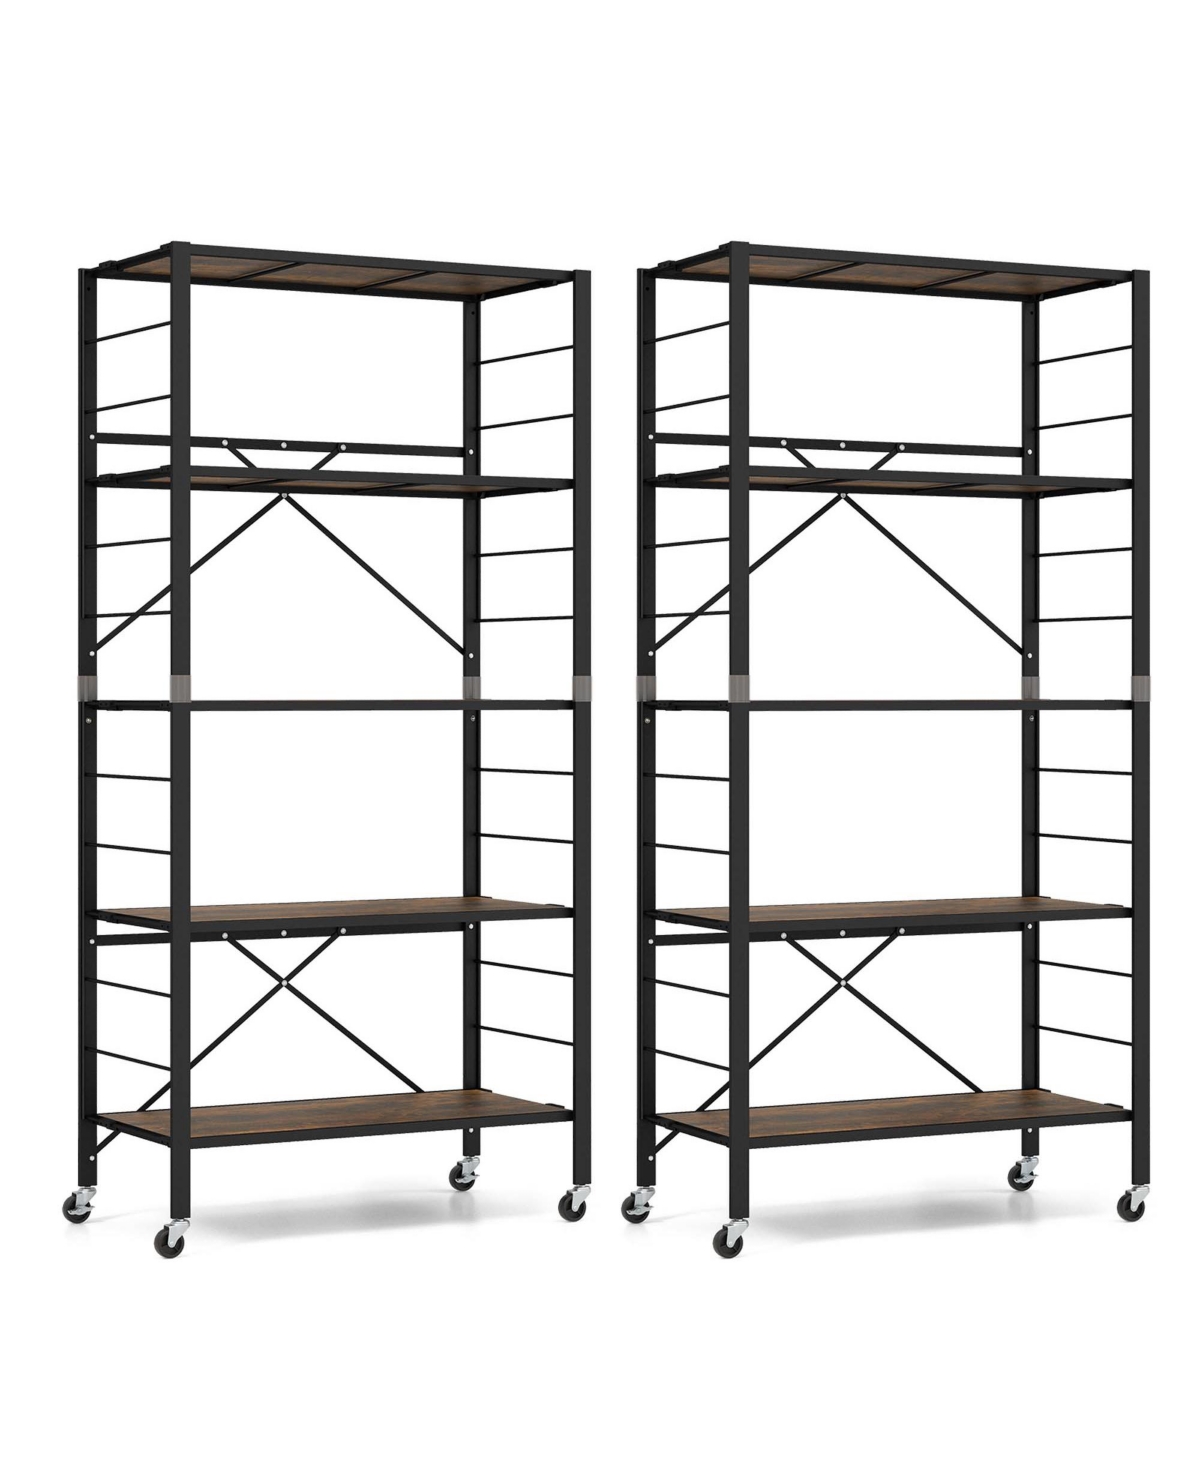 2 Pcs 5-Tier Folding Shelf Free Diy Design Shelving Unit with 4 Universal Wheels - Black